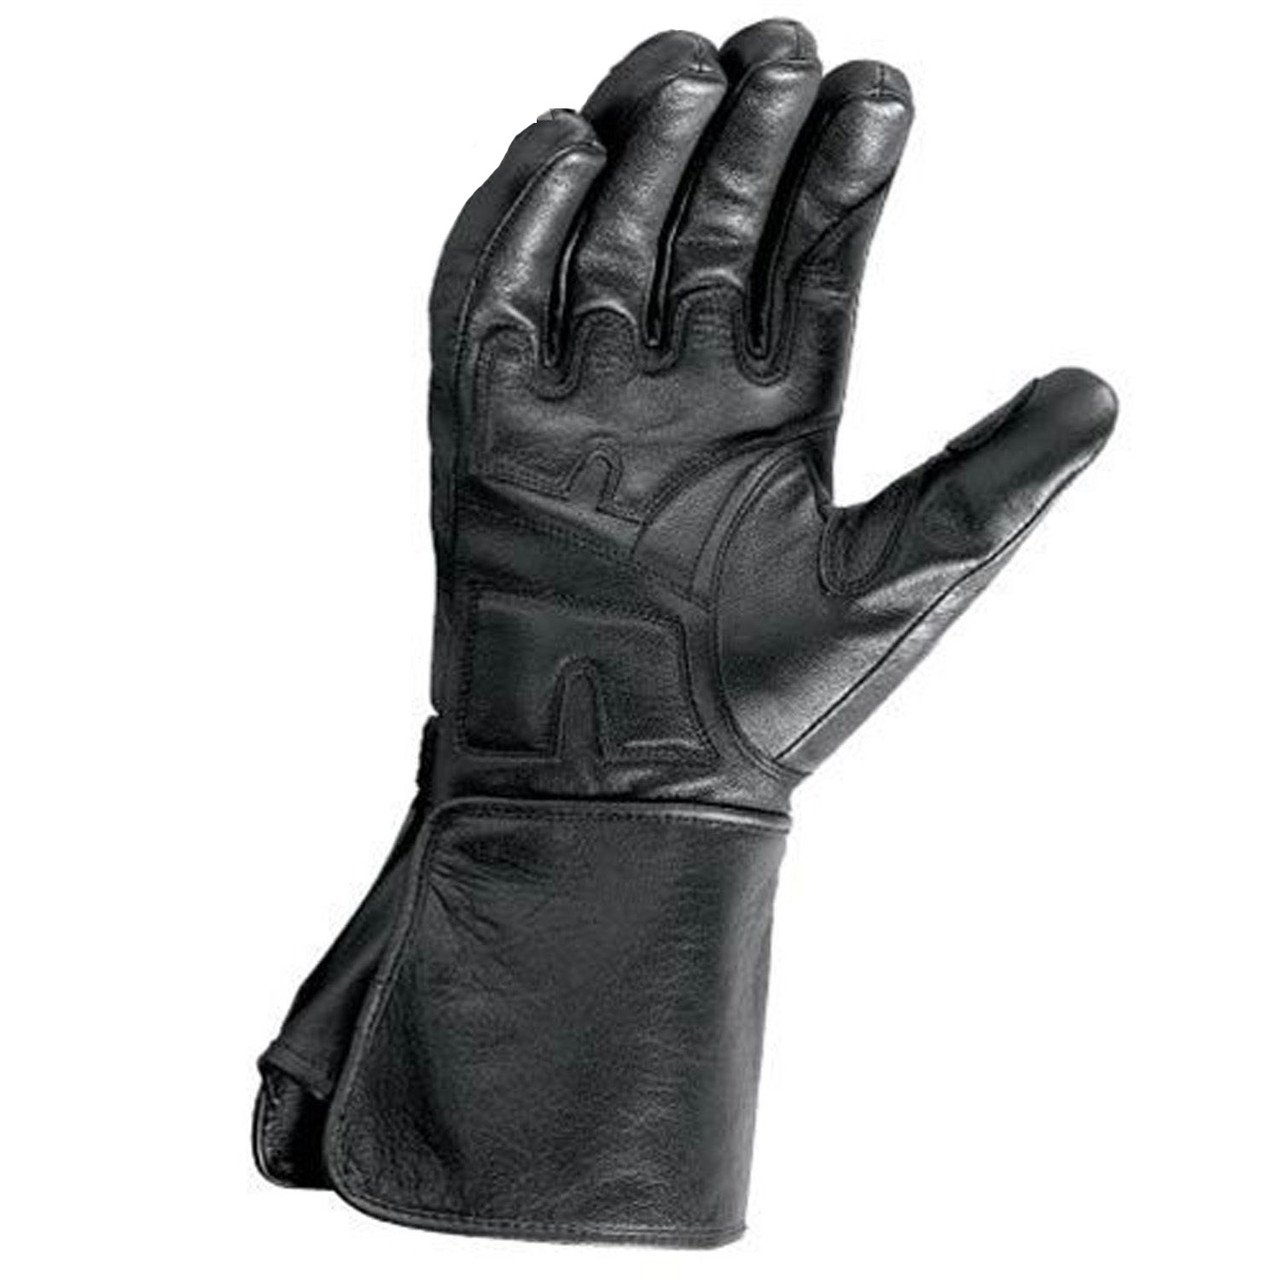 Castle New Black Leather Gauntlet Mid Season Motorcycle Gloves, Medium, 20-3114